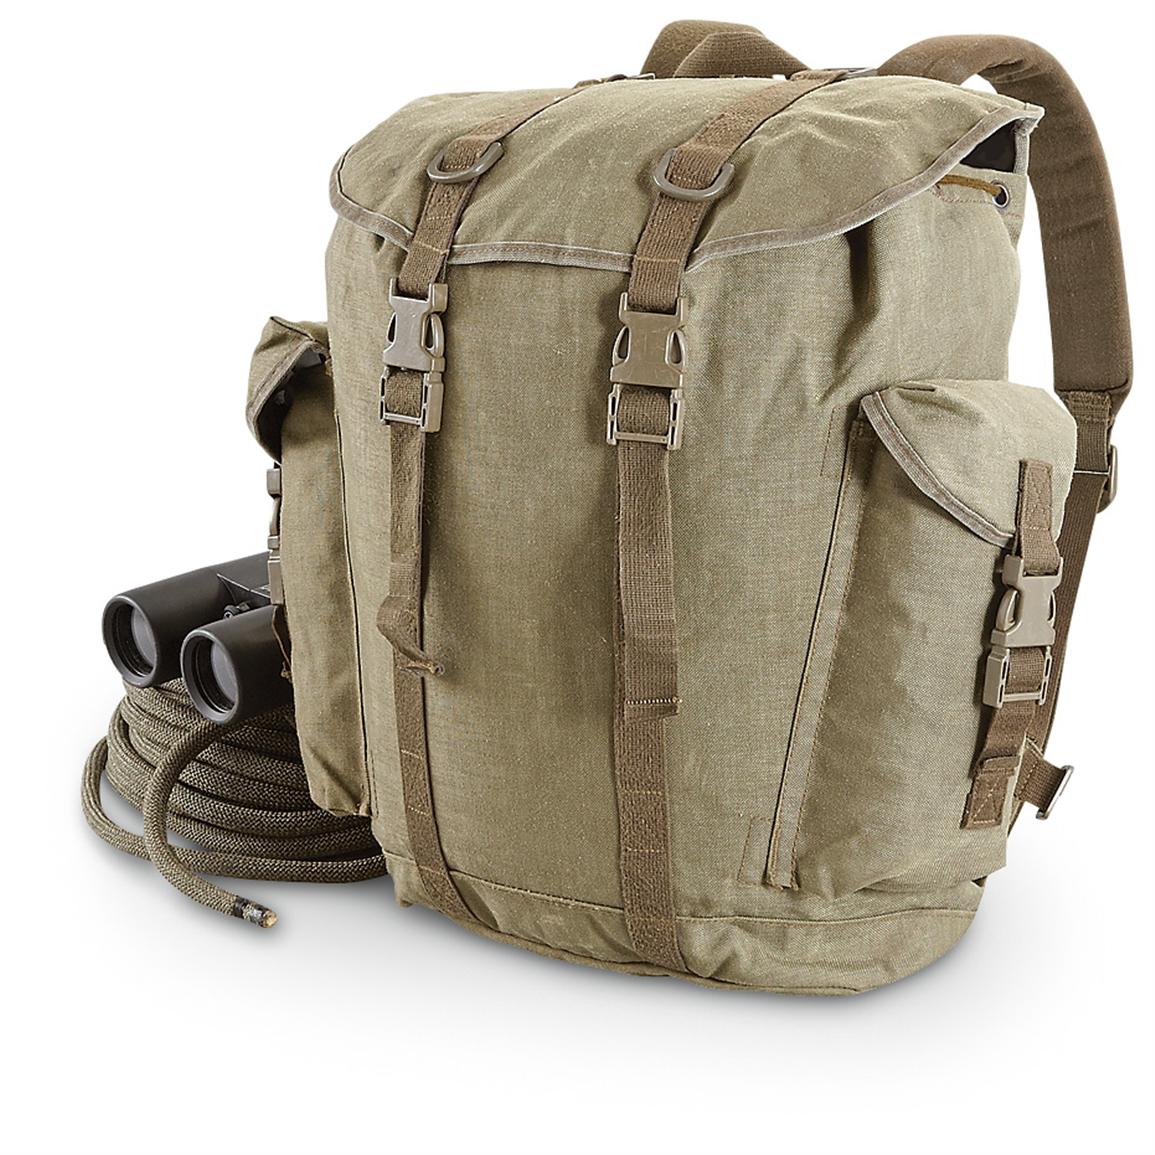 Used German Military Rucksack, Olive Drab - 223173, Rucksacks & Backpacks at Sportsman&#39;s Guide